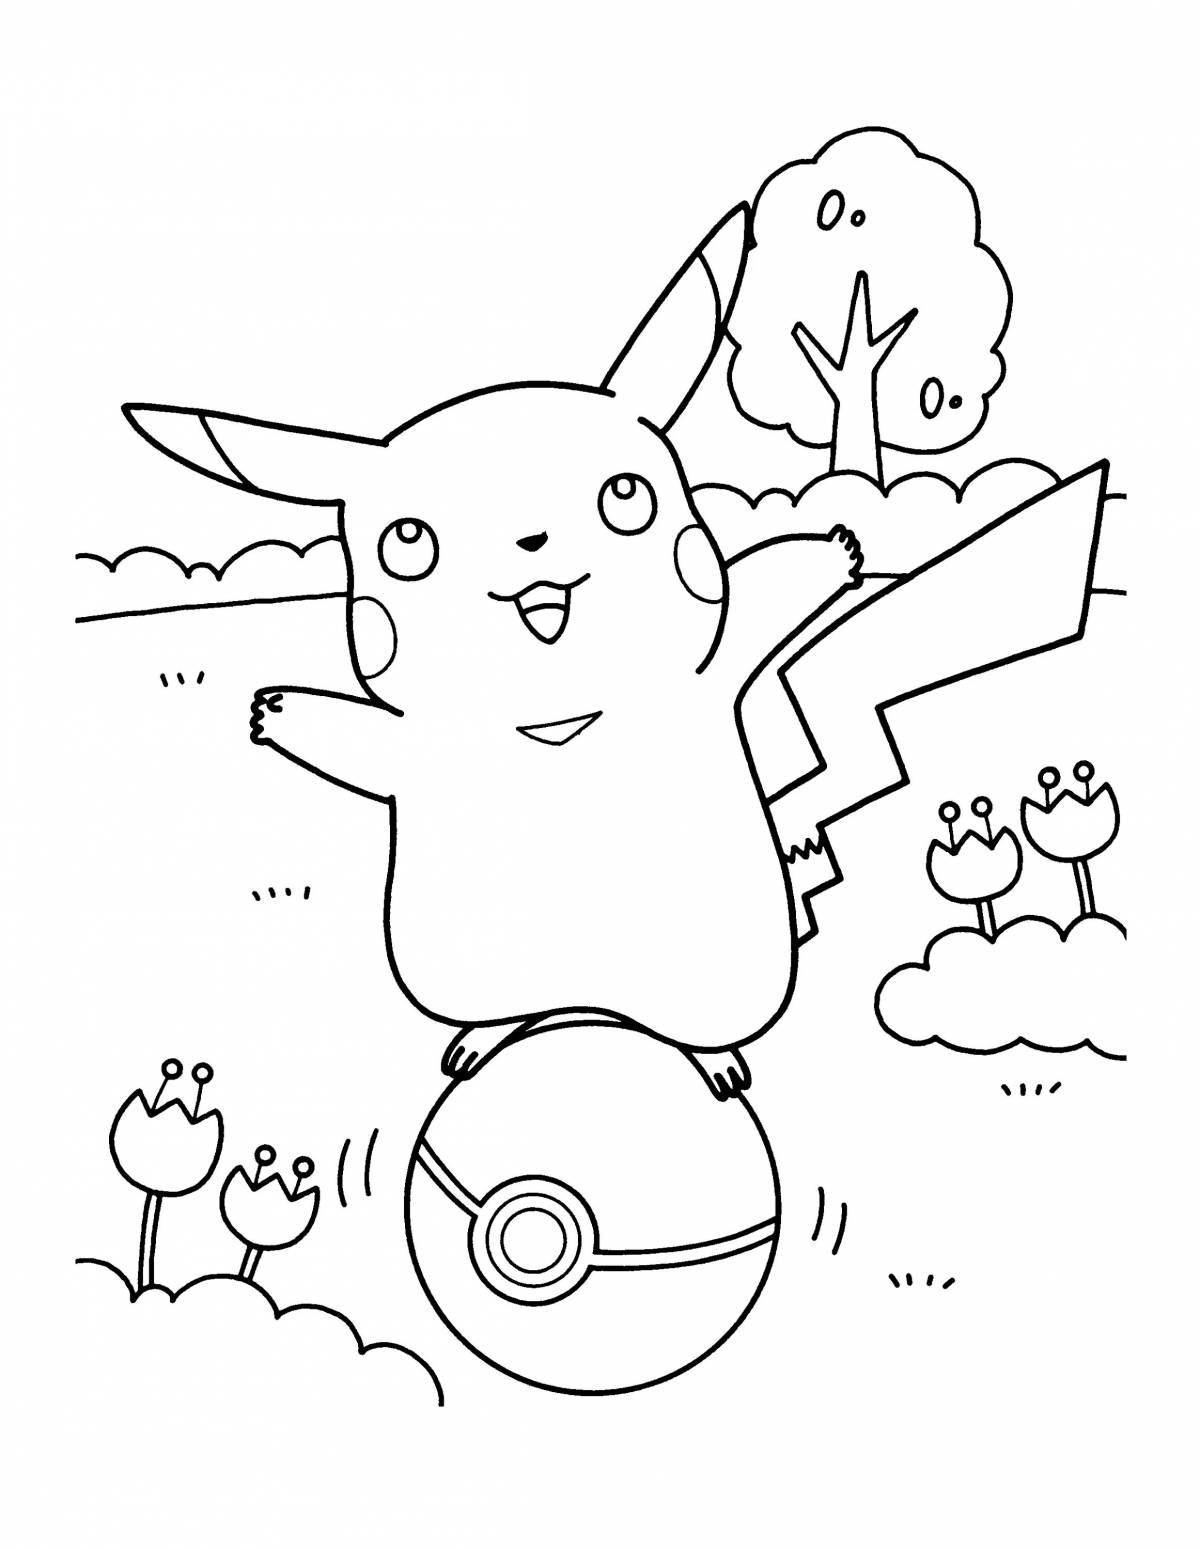 Playful pikachu and pokeball coloring page